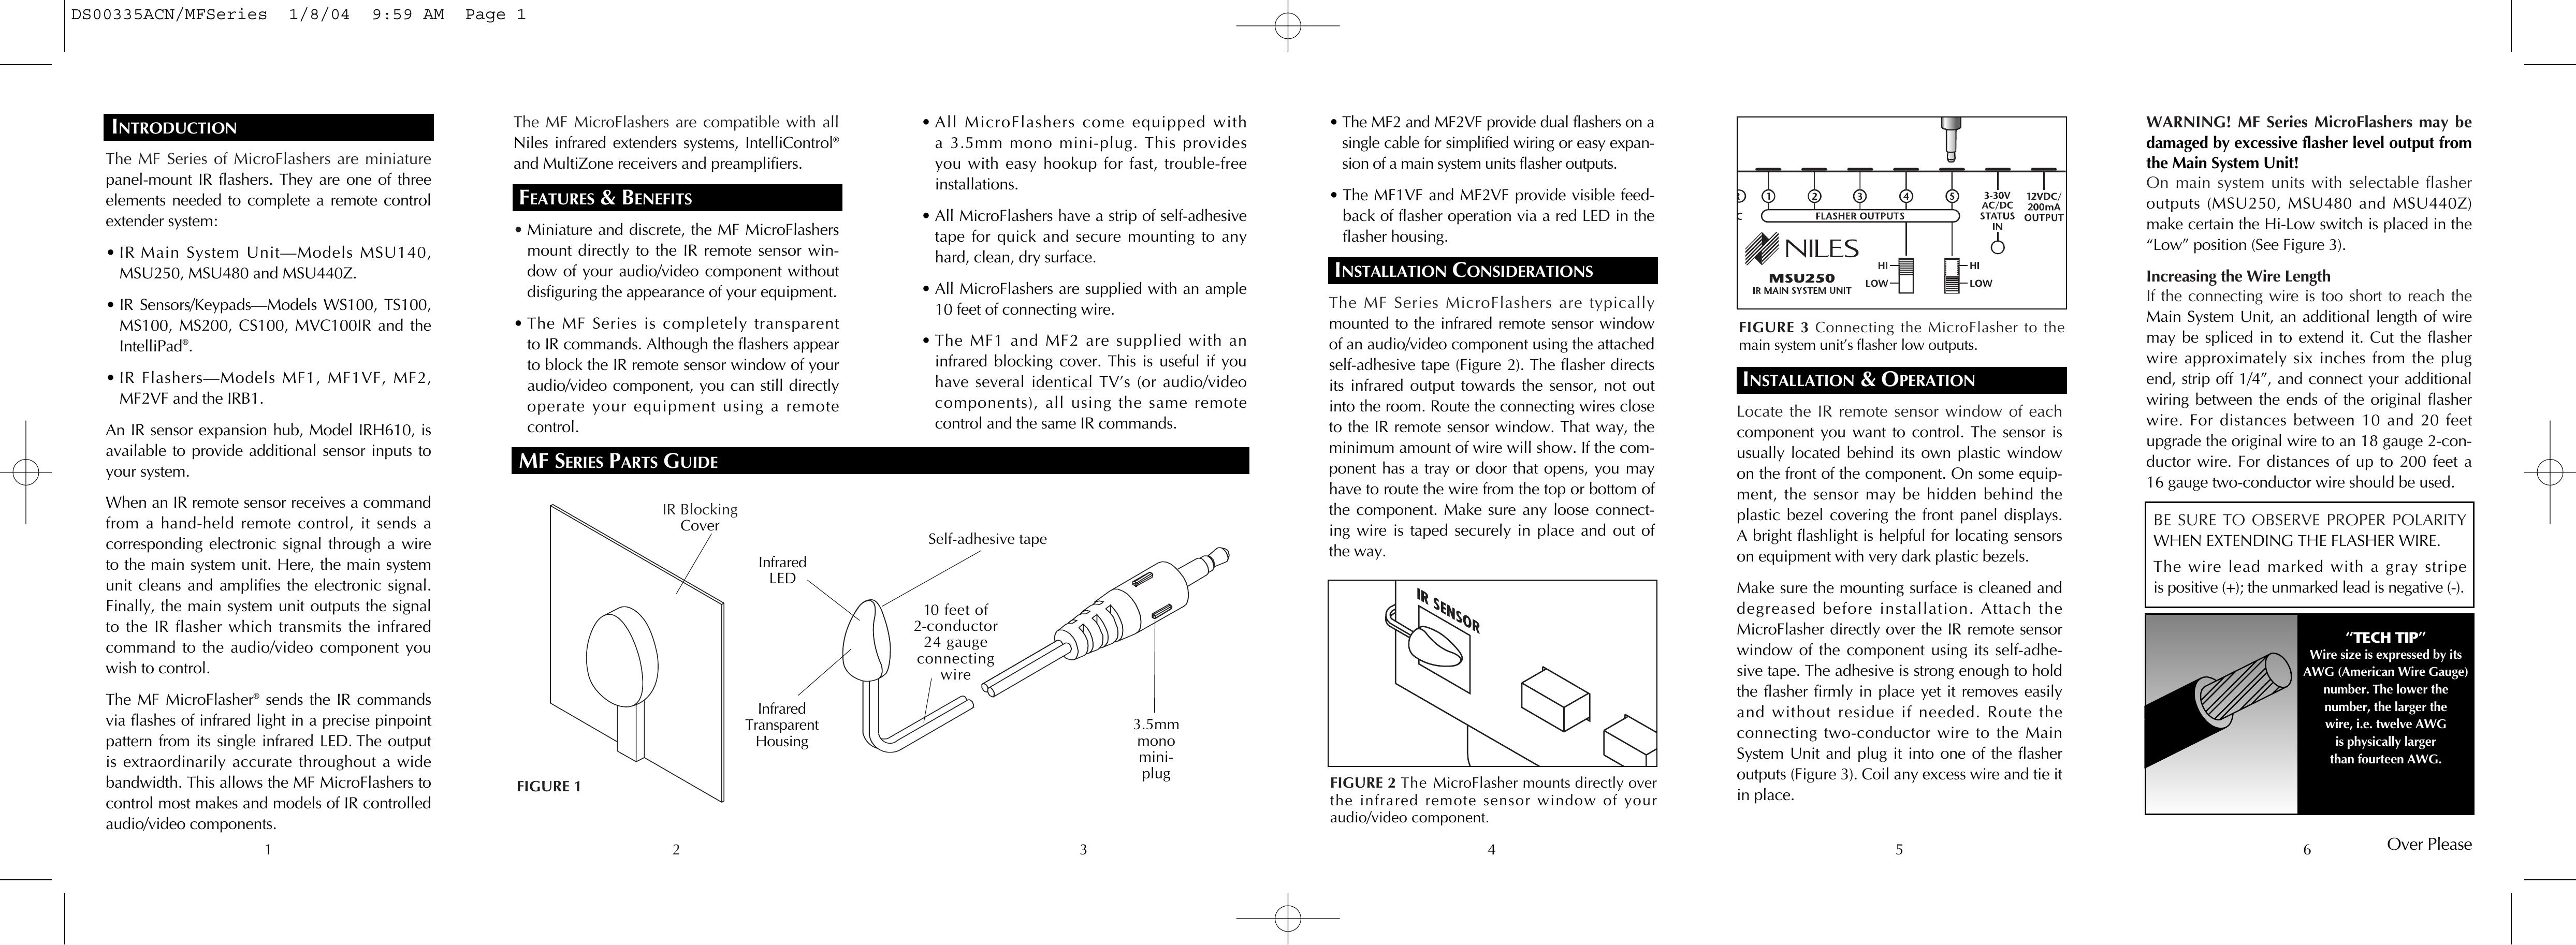 Niles Audio MSU250 Microscope & Magnifier User Manual